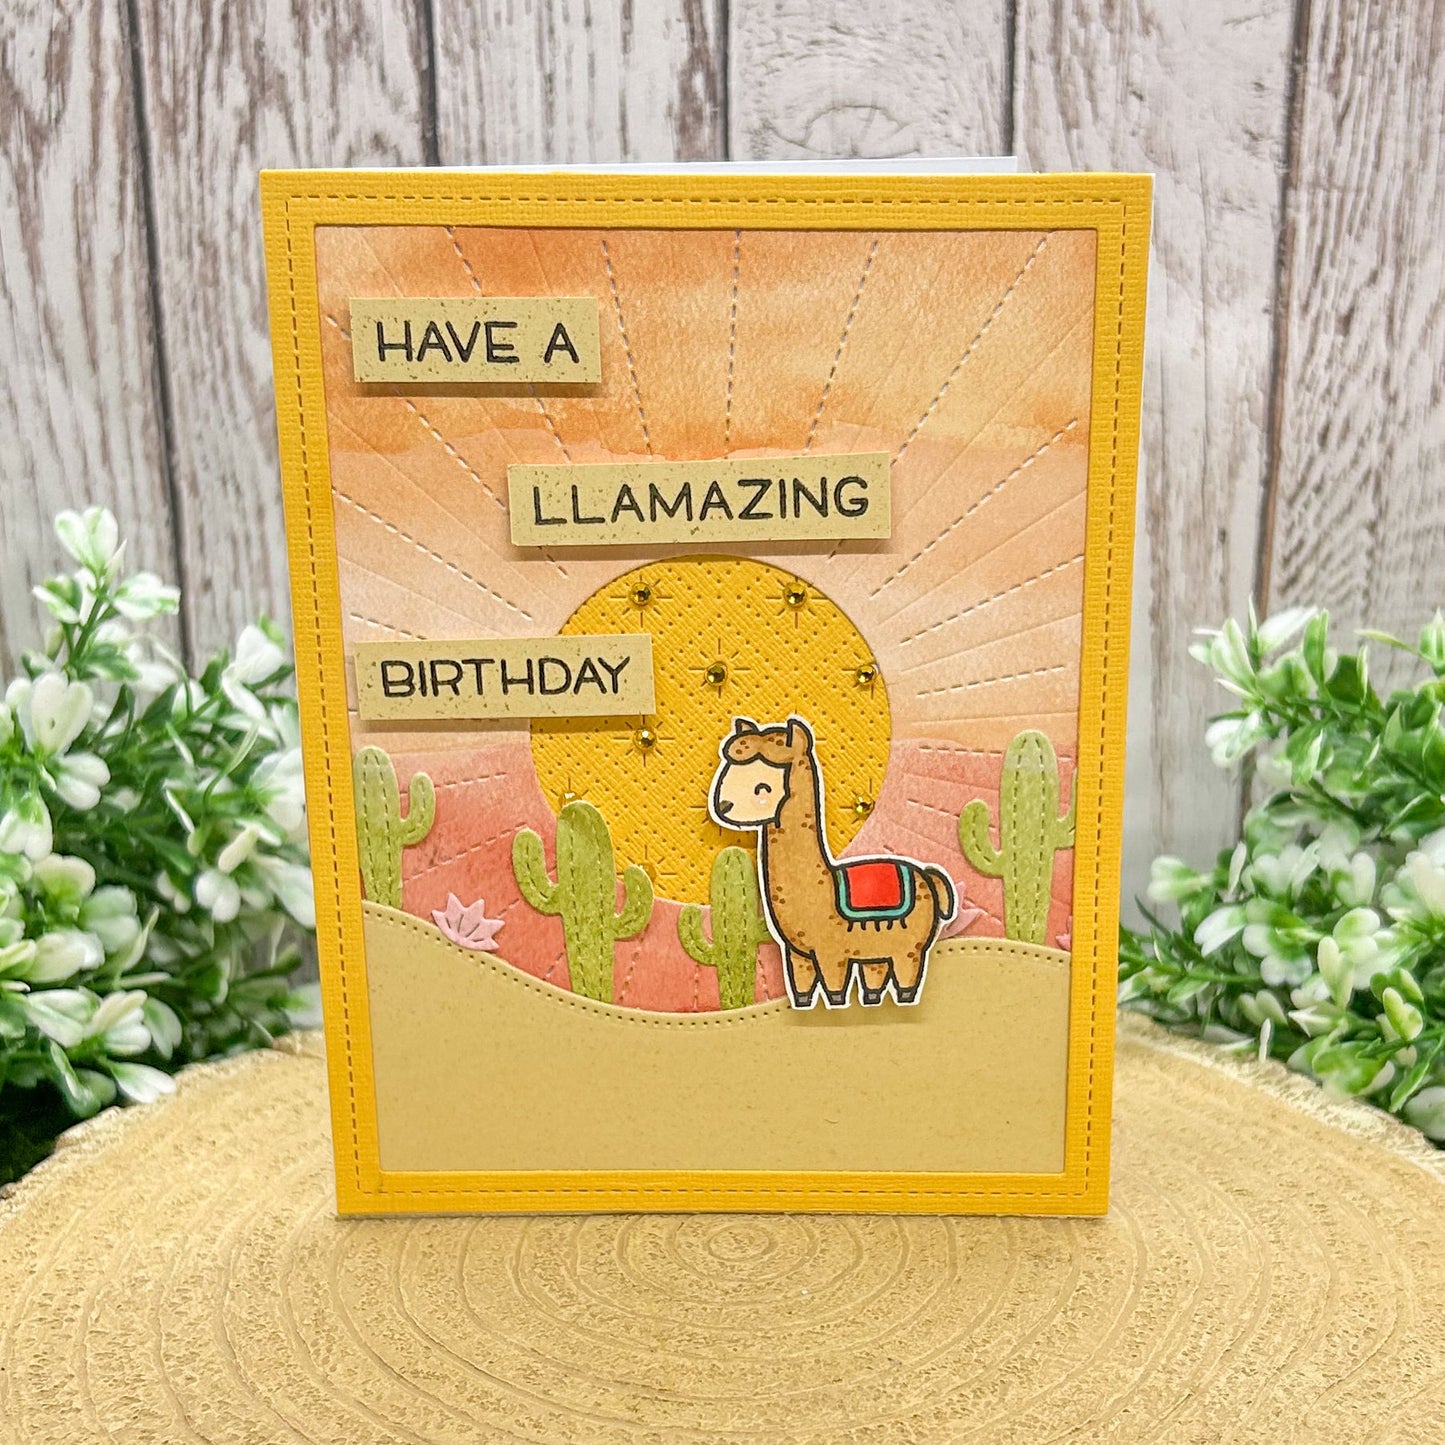 Have A Llamazing Birthday! Handmade Birthday Card